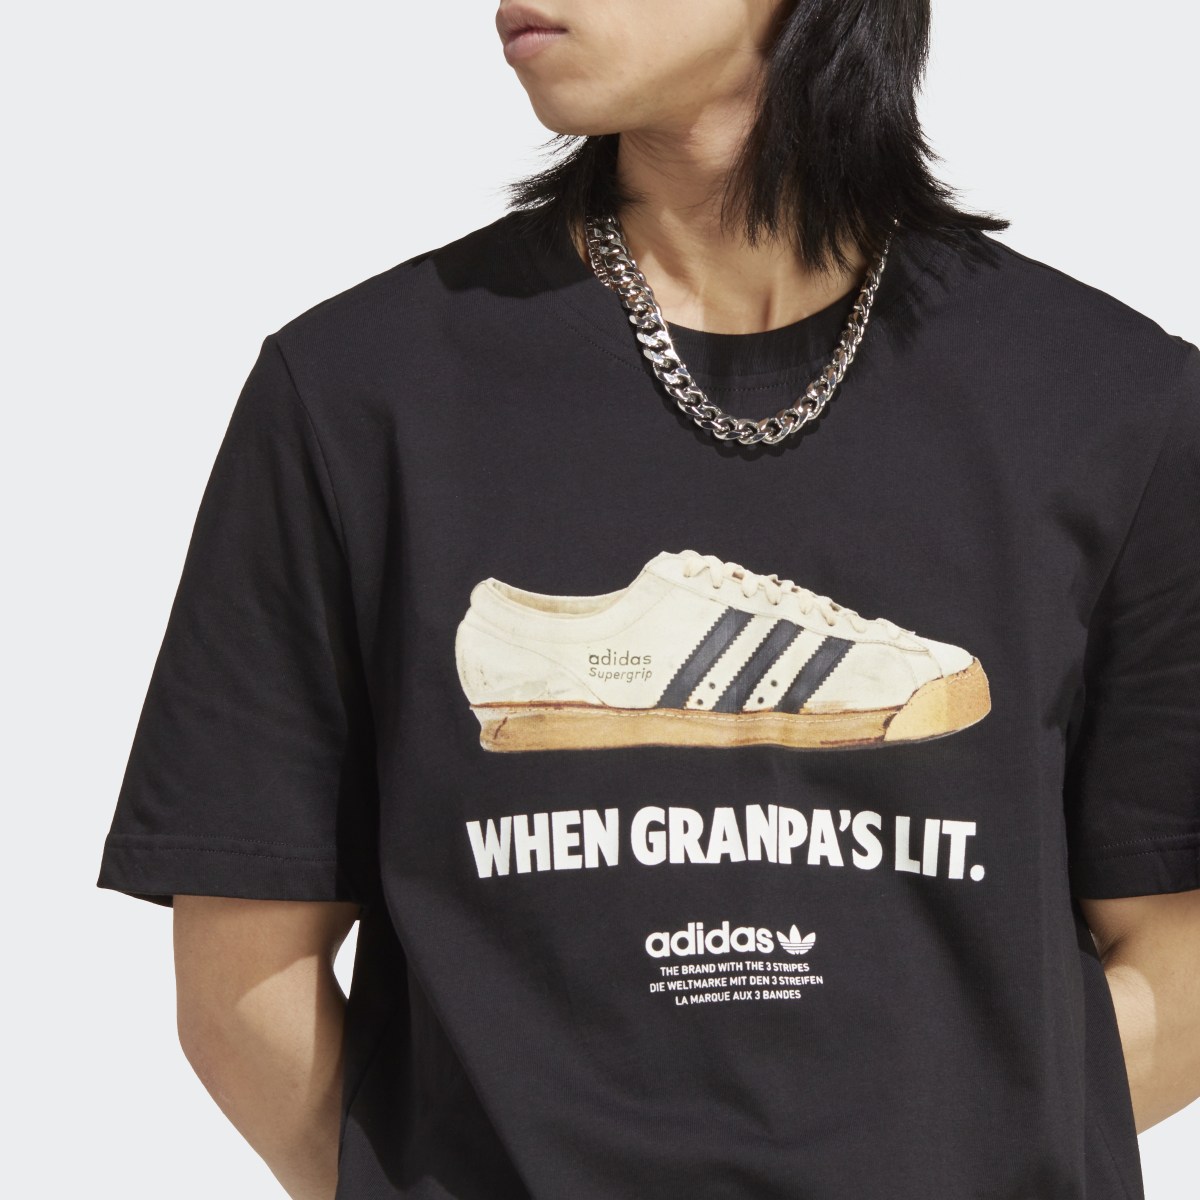 Adidas Graphics New Age T-Shirt. 6